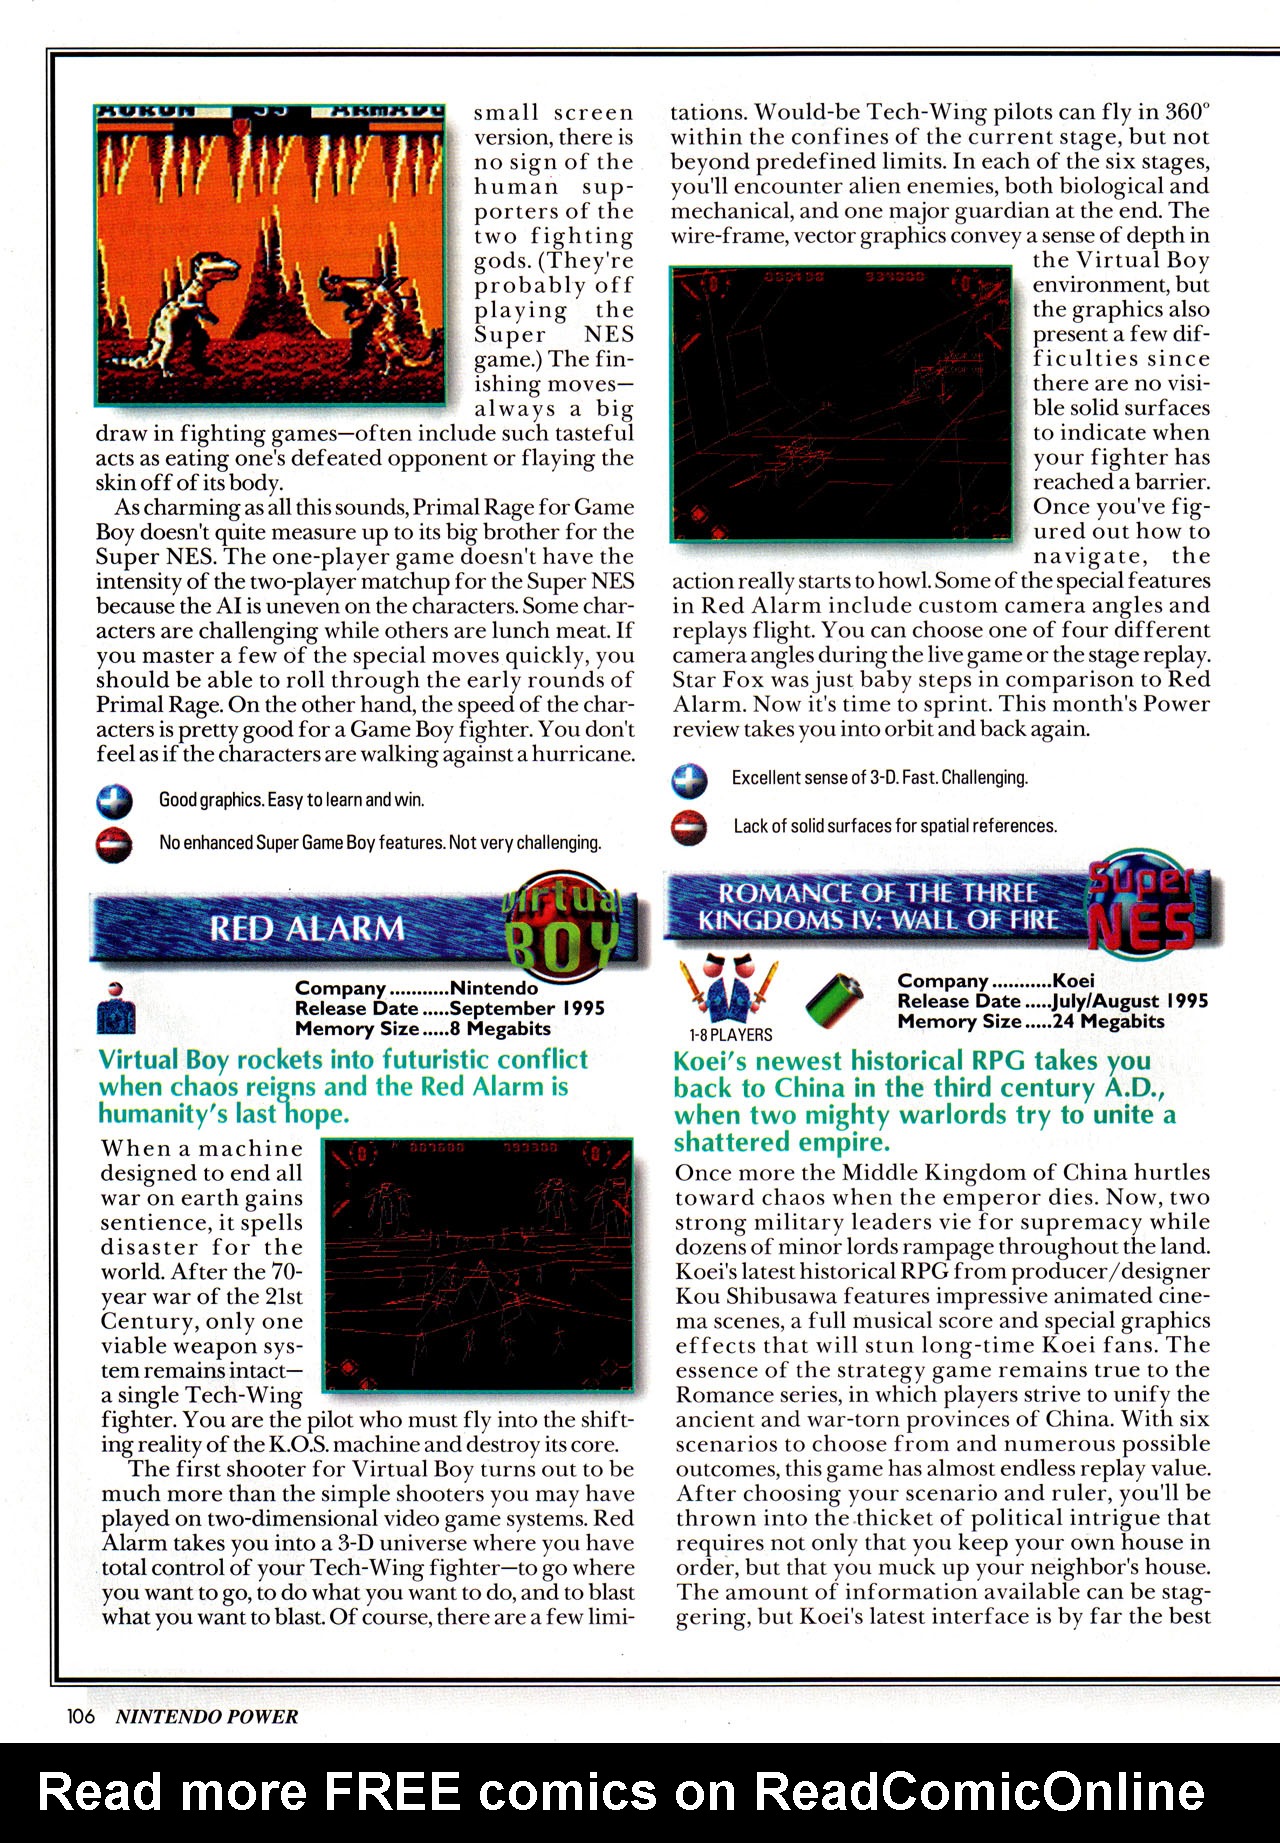 Read online Nintendo Power comic -  Issue #76 - 113